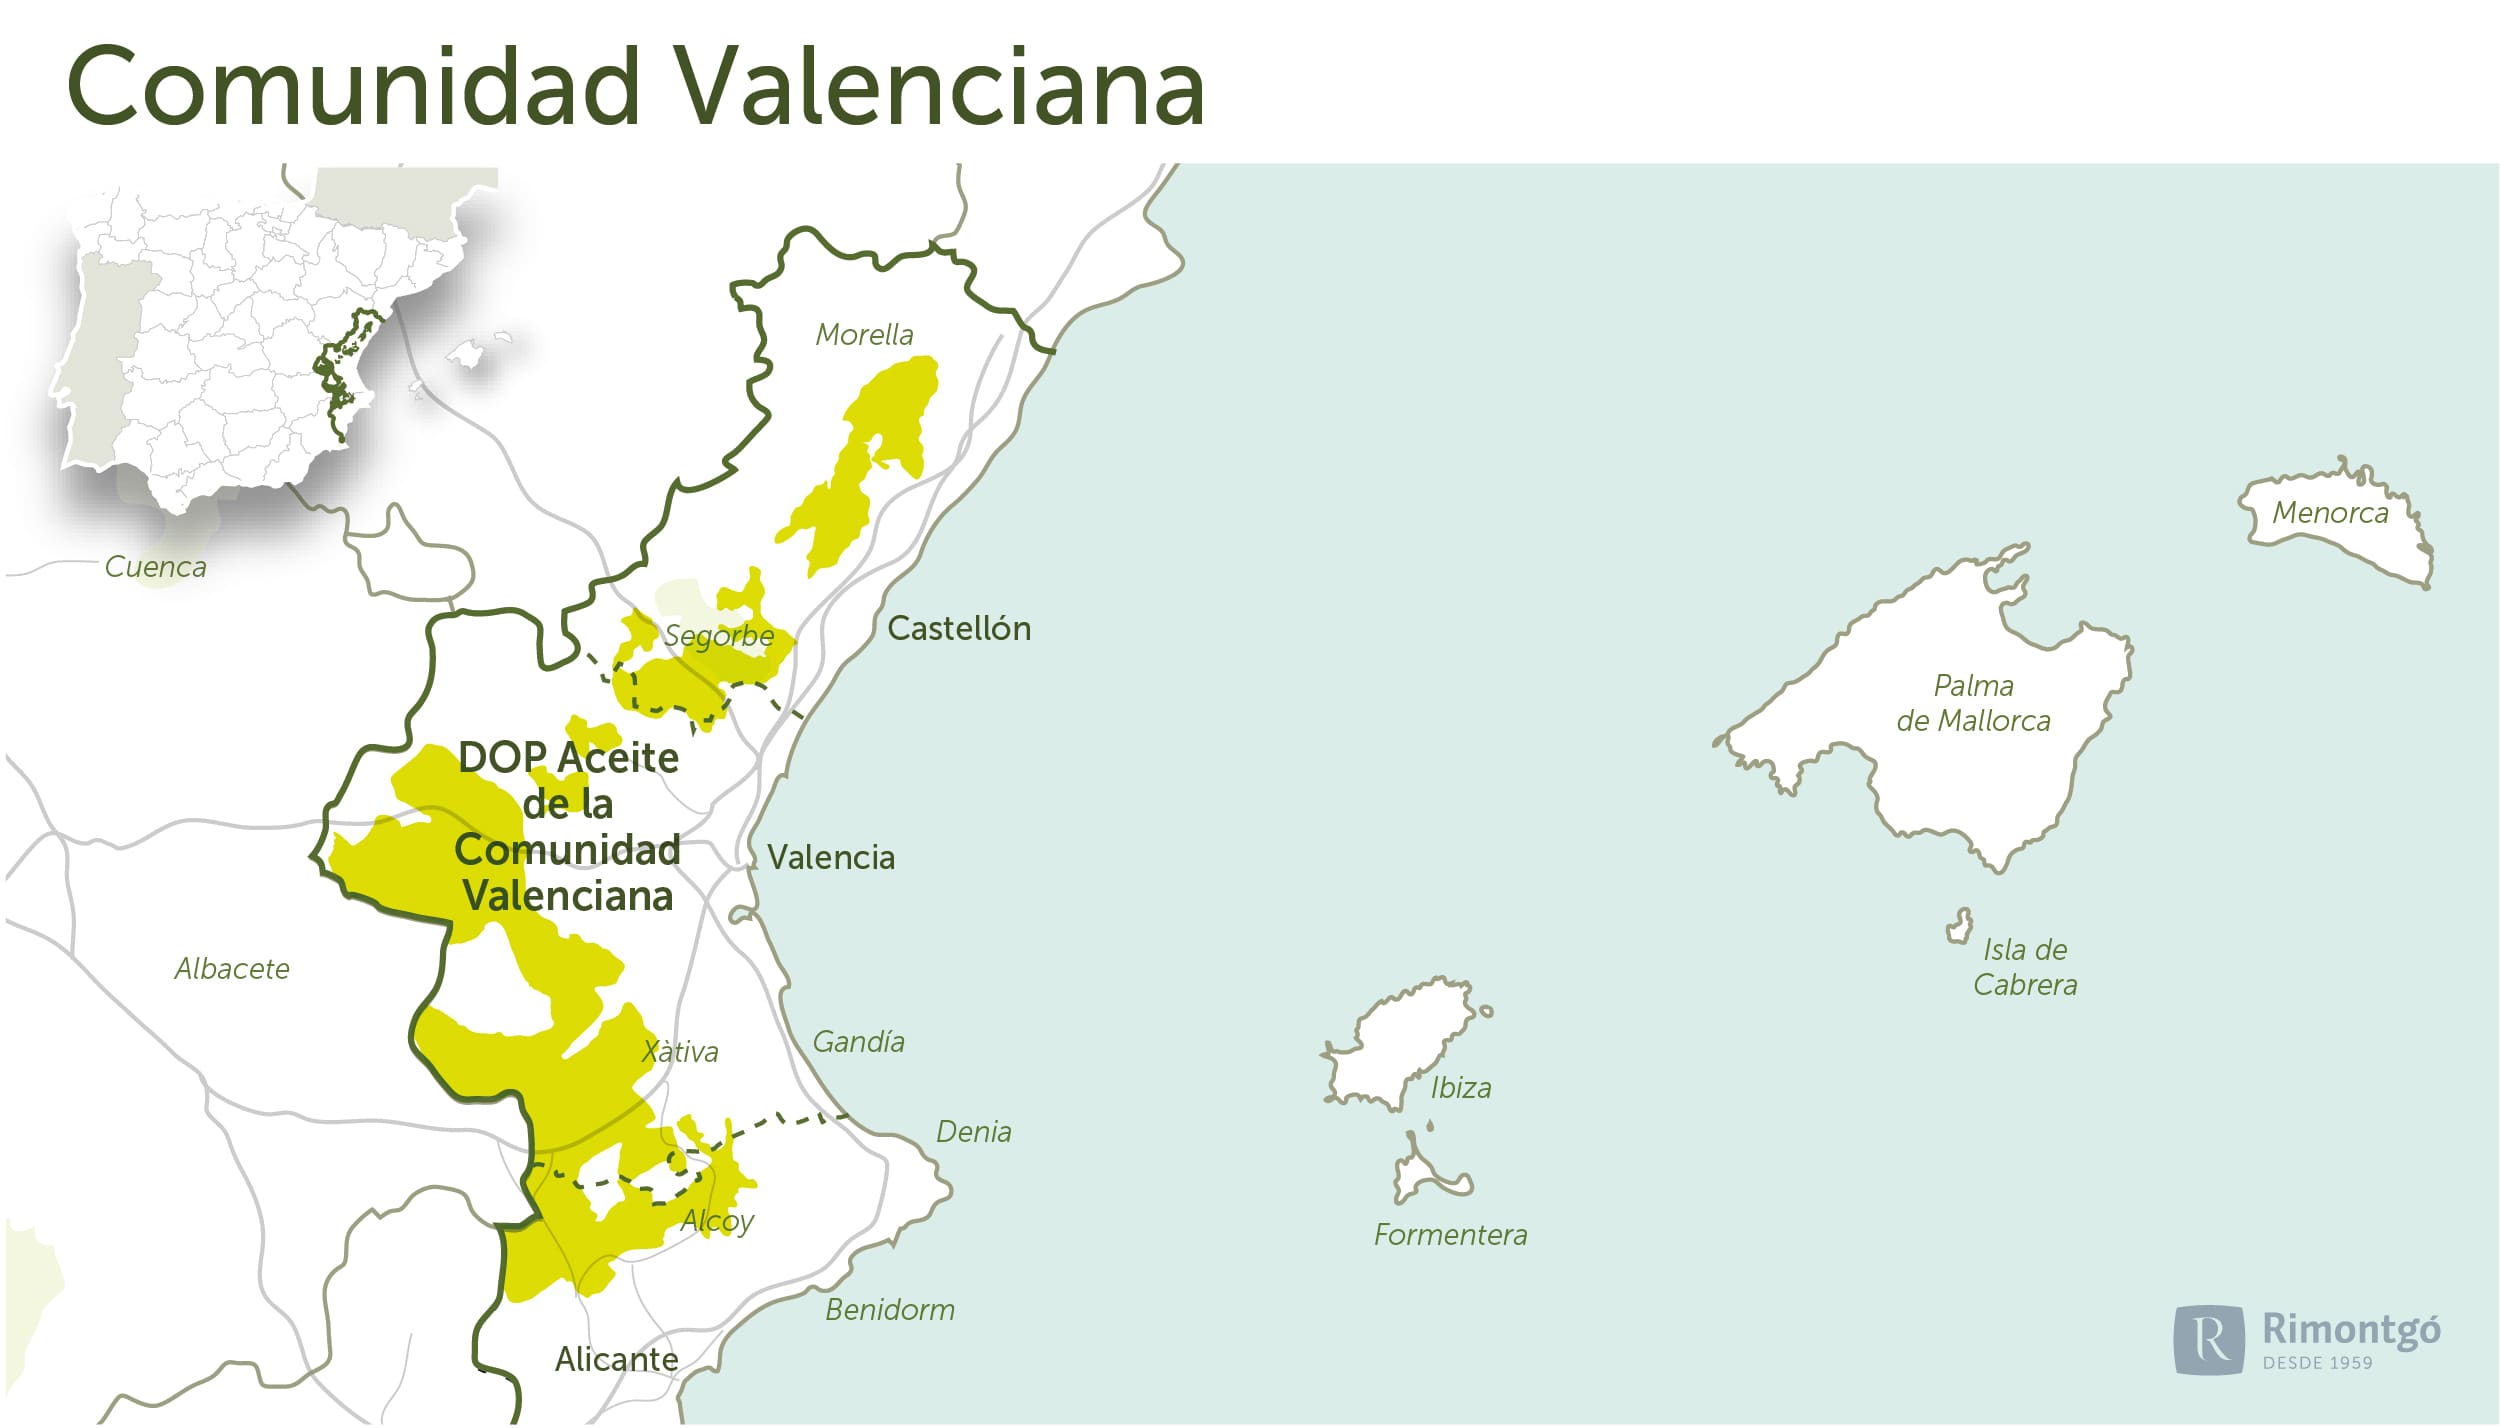 Valencian Community